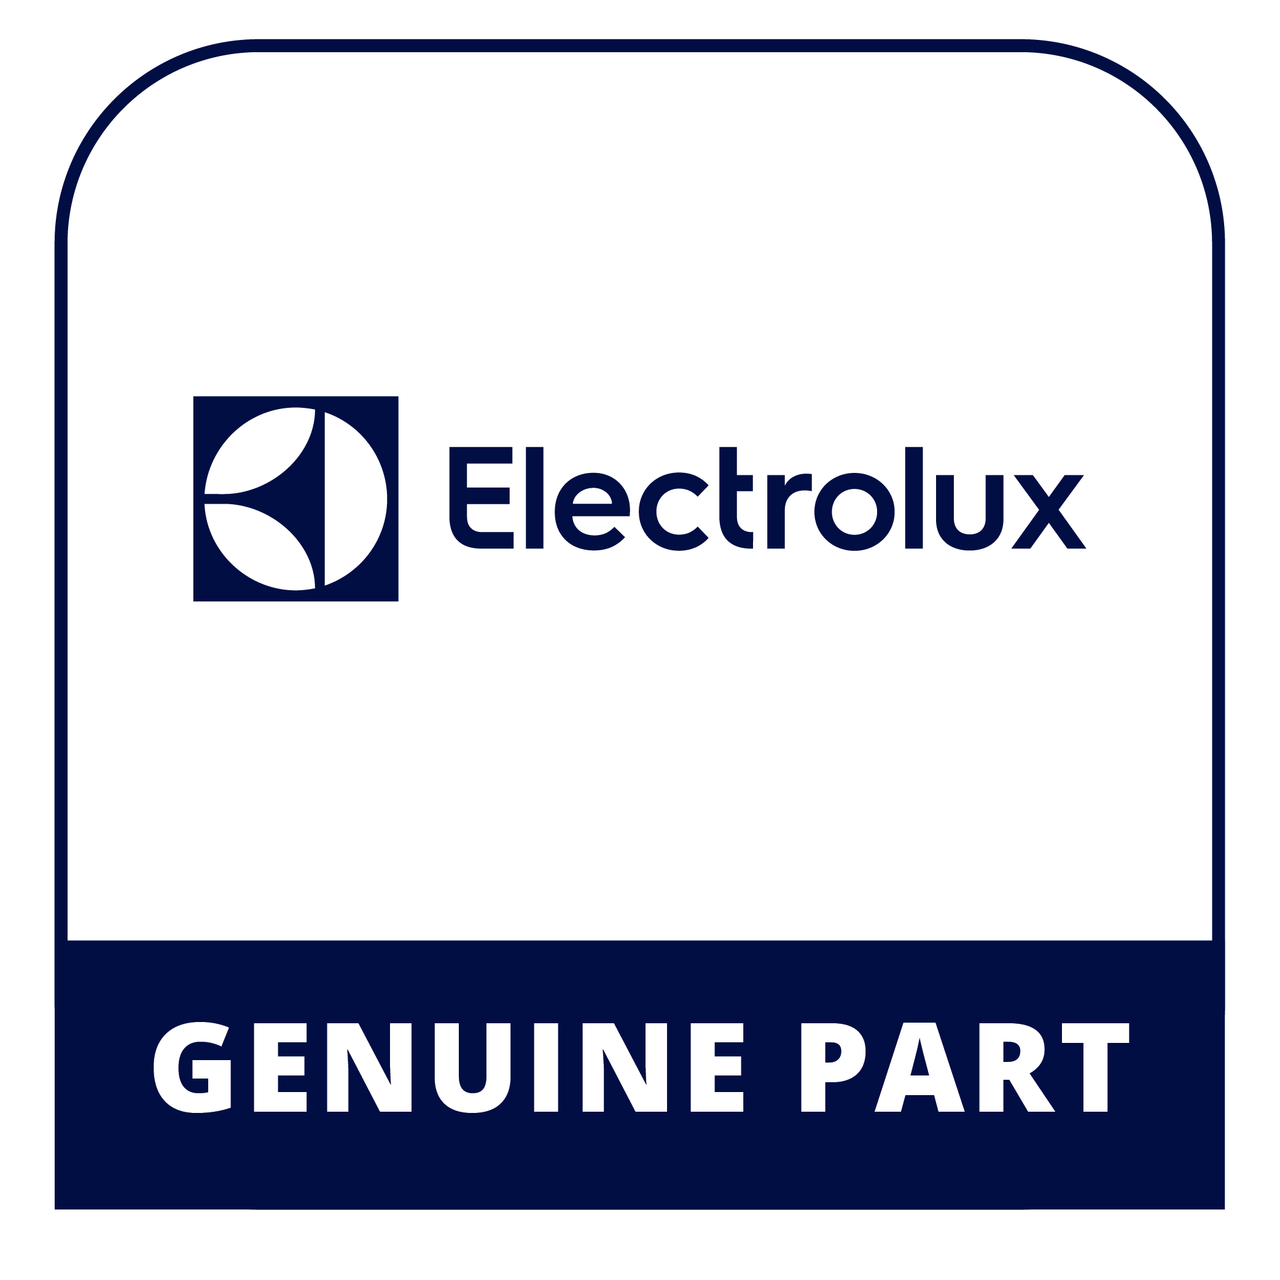 Frigidaire - Electrolux 5303281153 - Rear Bearing Kit - Genuine Electrolux Part